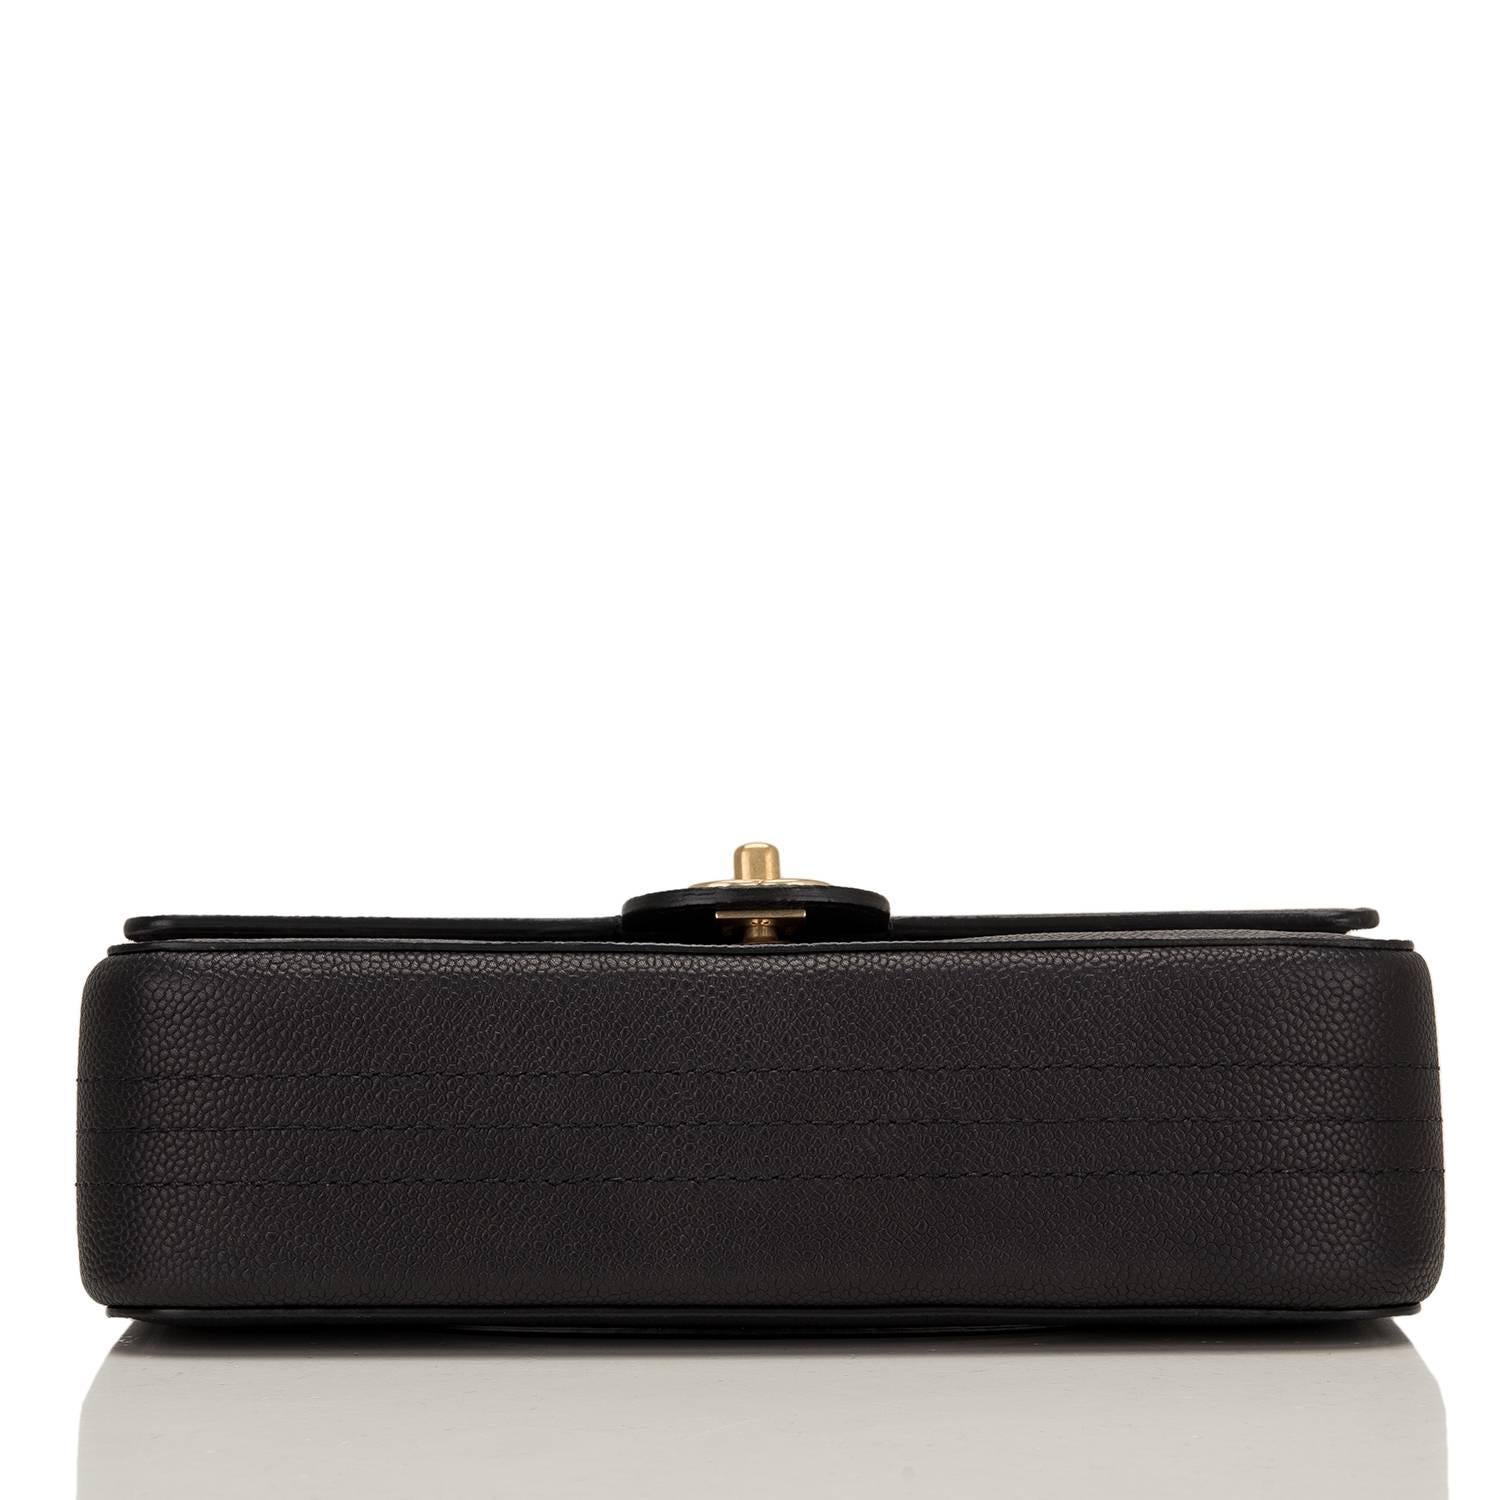 Chanel Black Caviar Medium Classic Double Flap Bag NEW For Sale 1